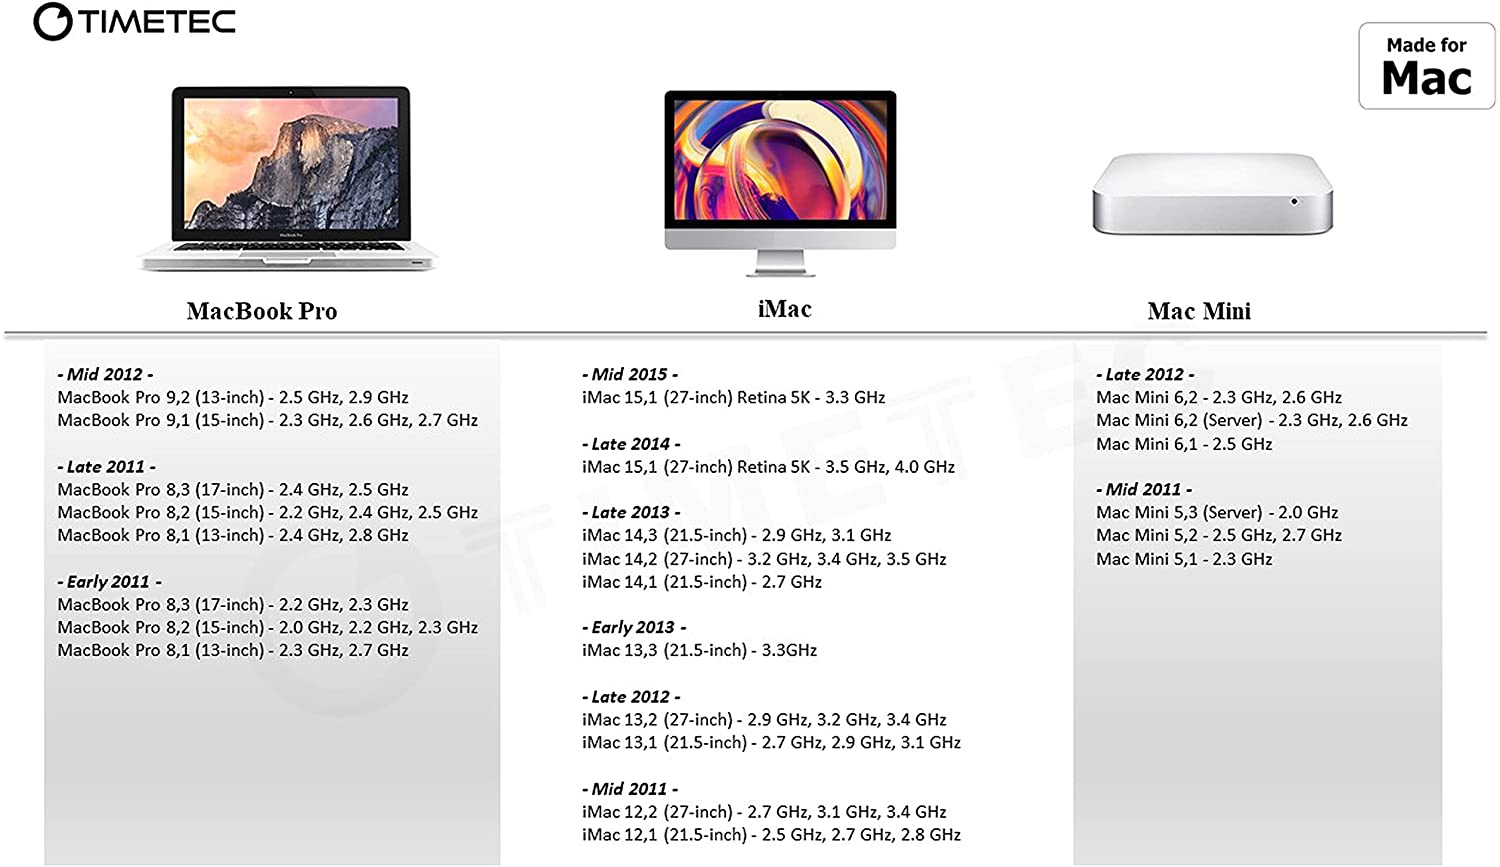 sata speed for mac mini 2011